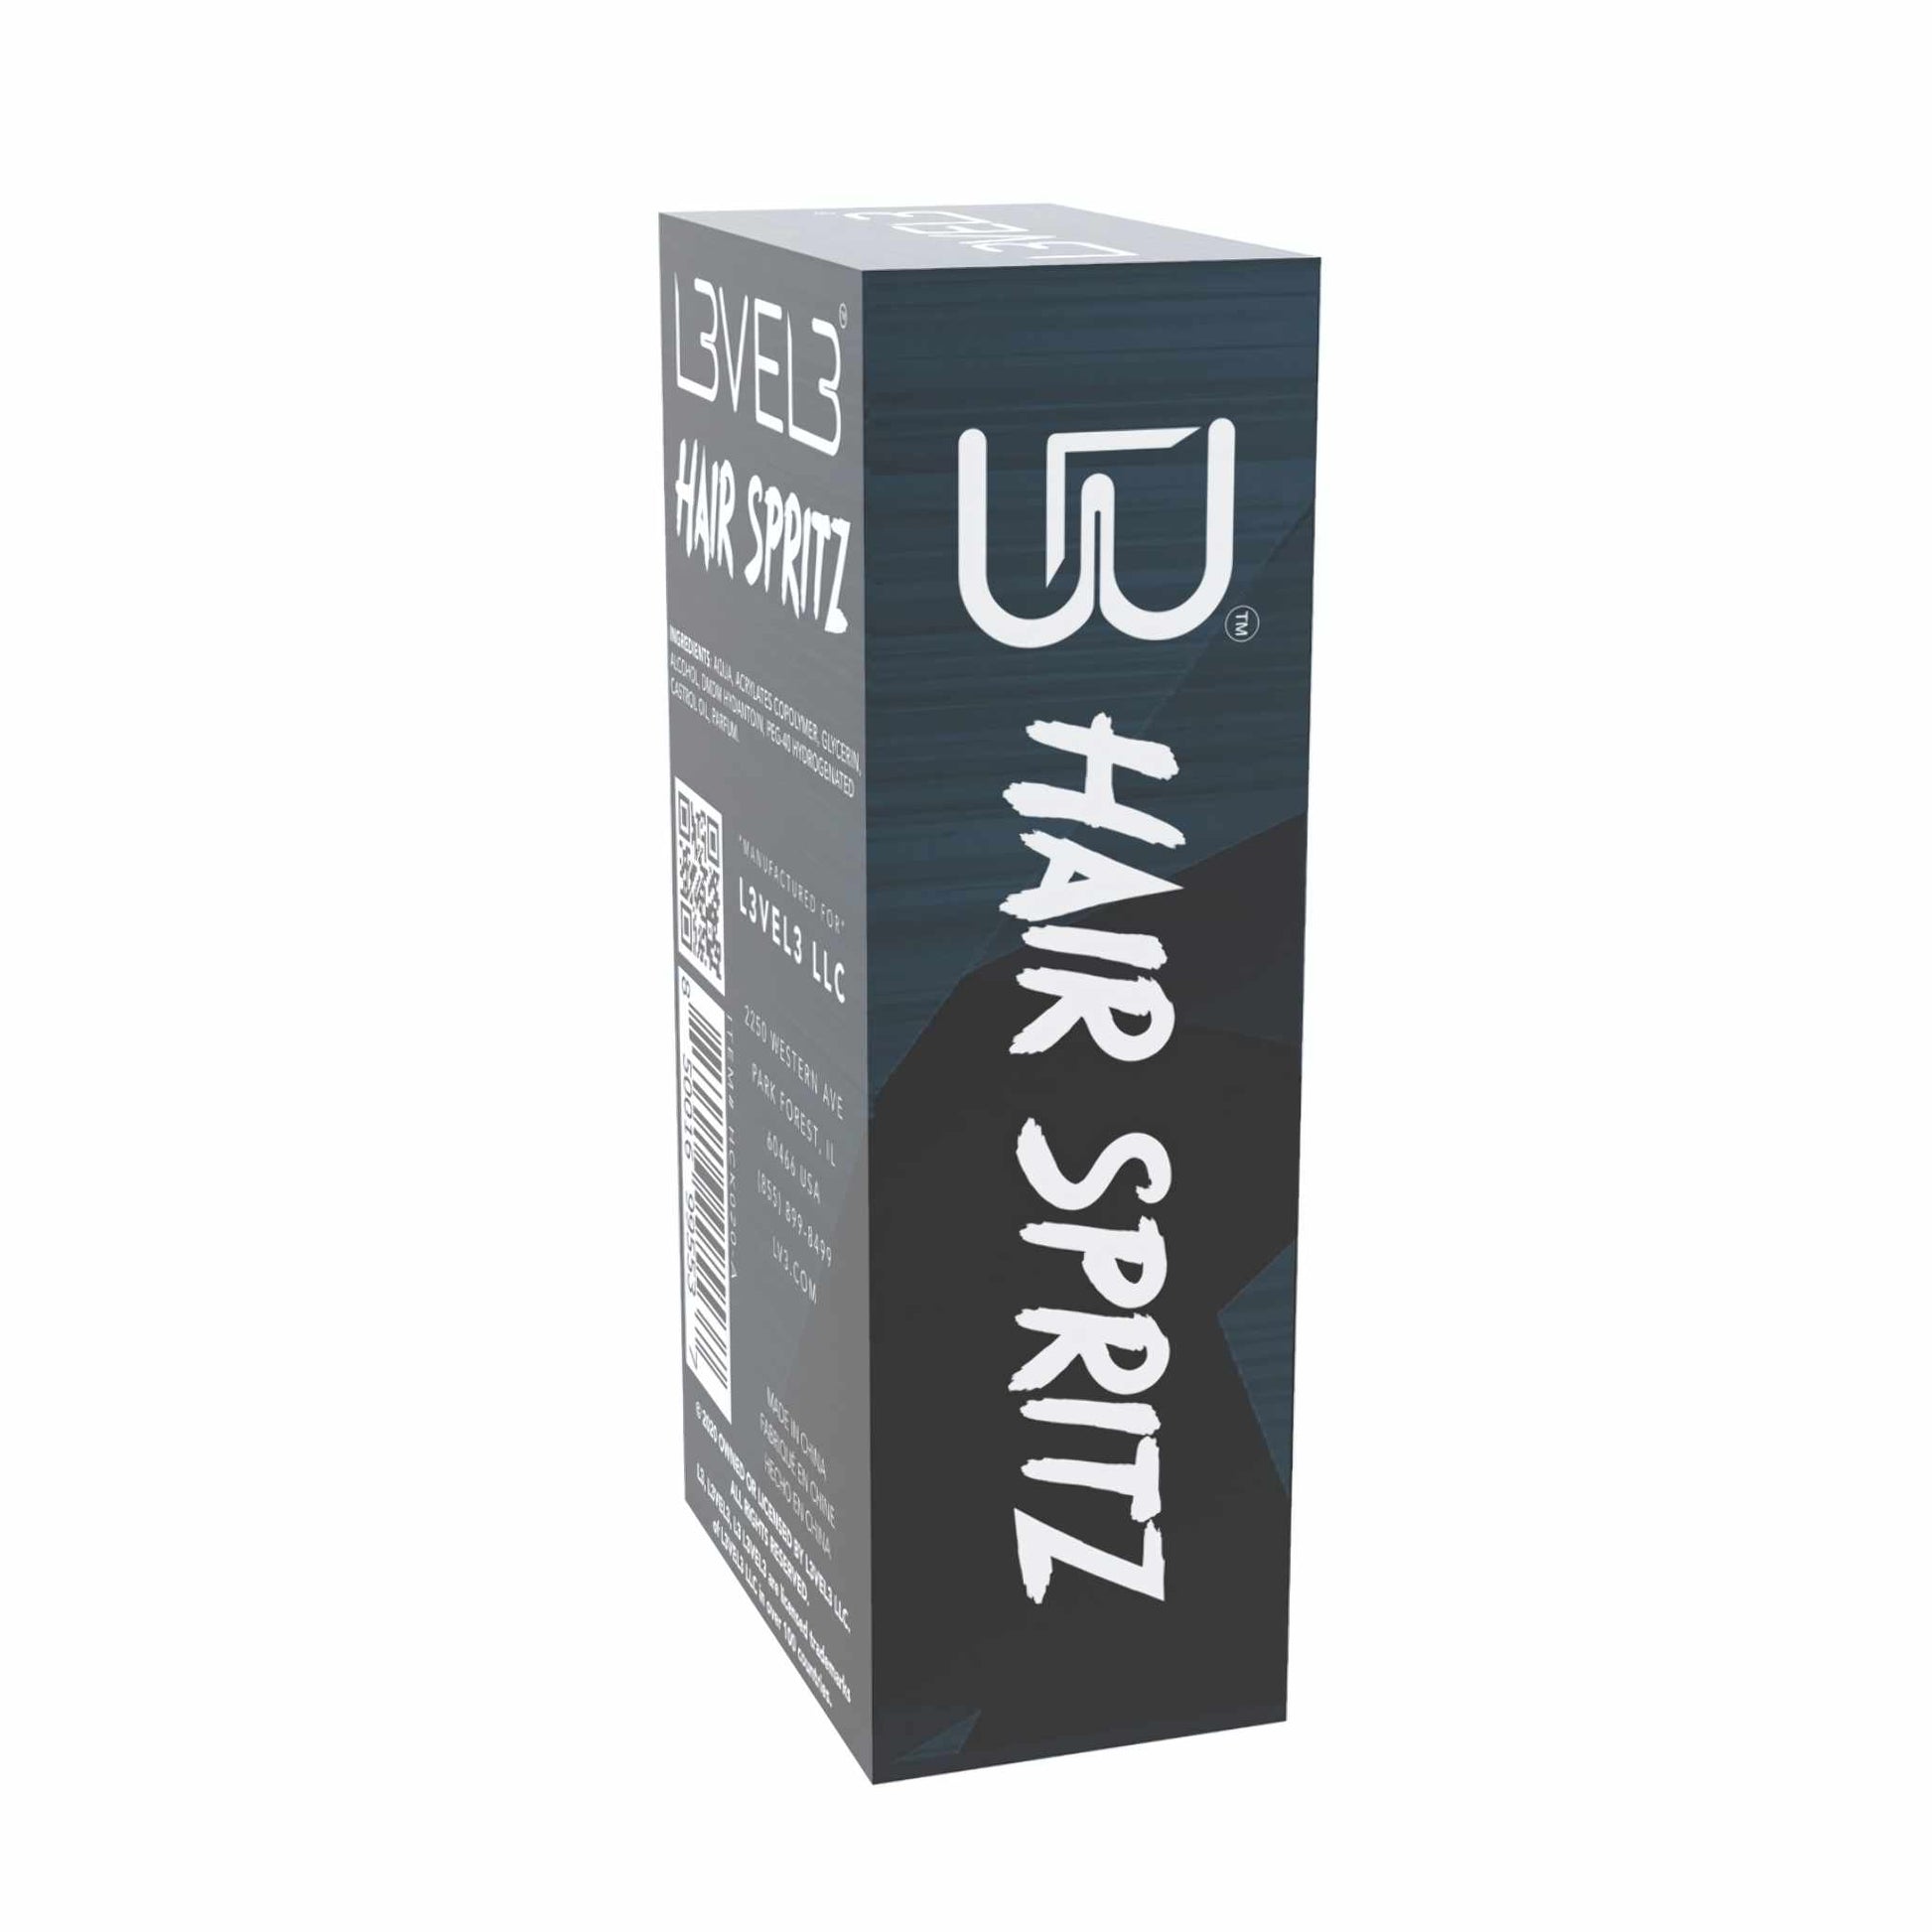 Level3 Hair Spritz Spray 100 ml Box Sideways